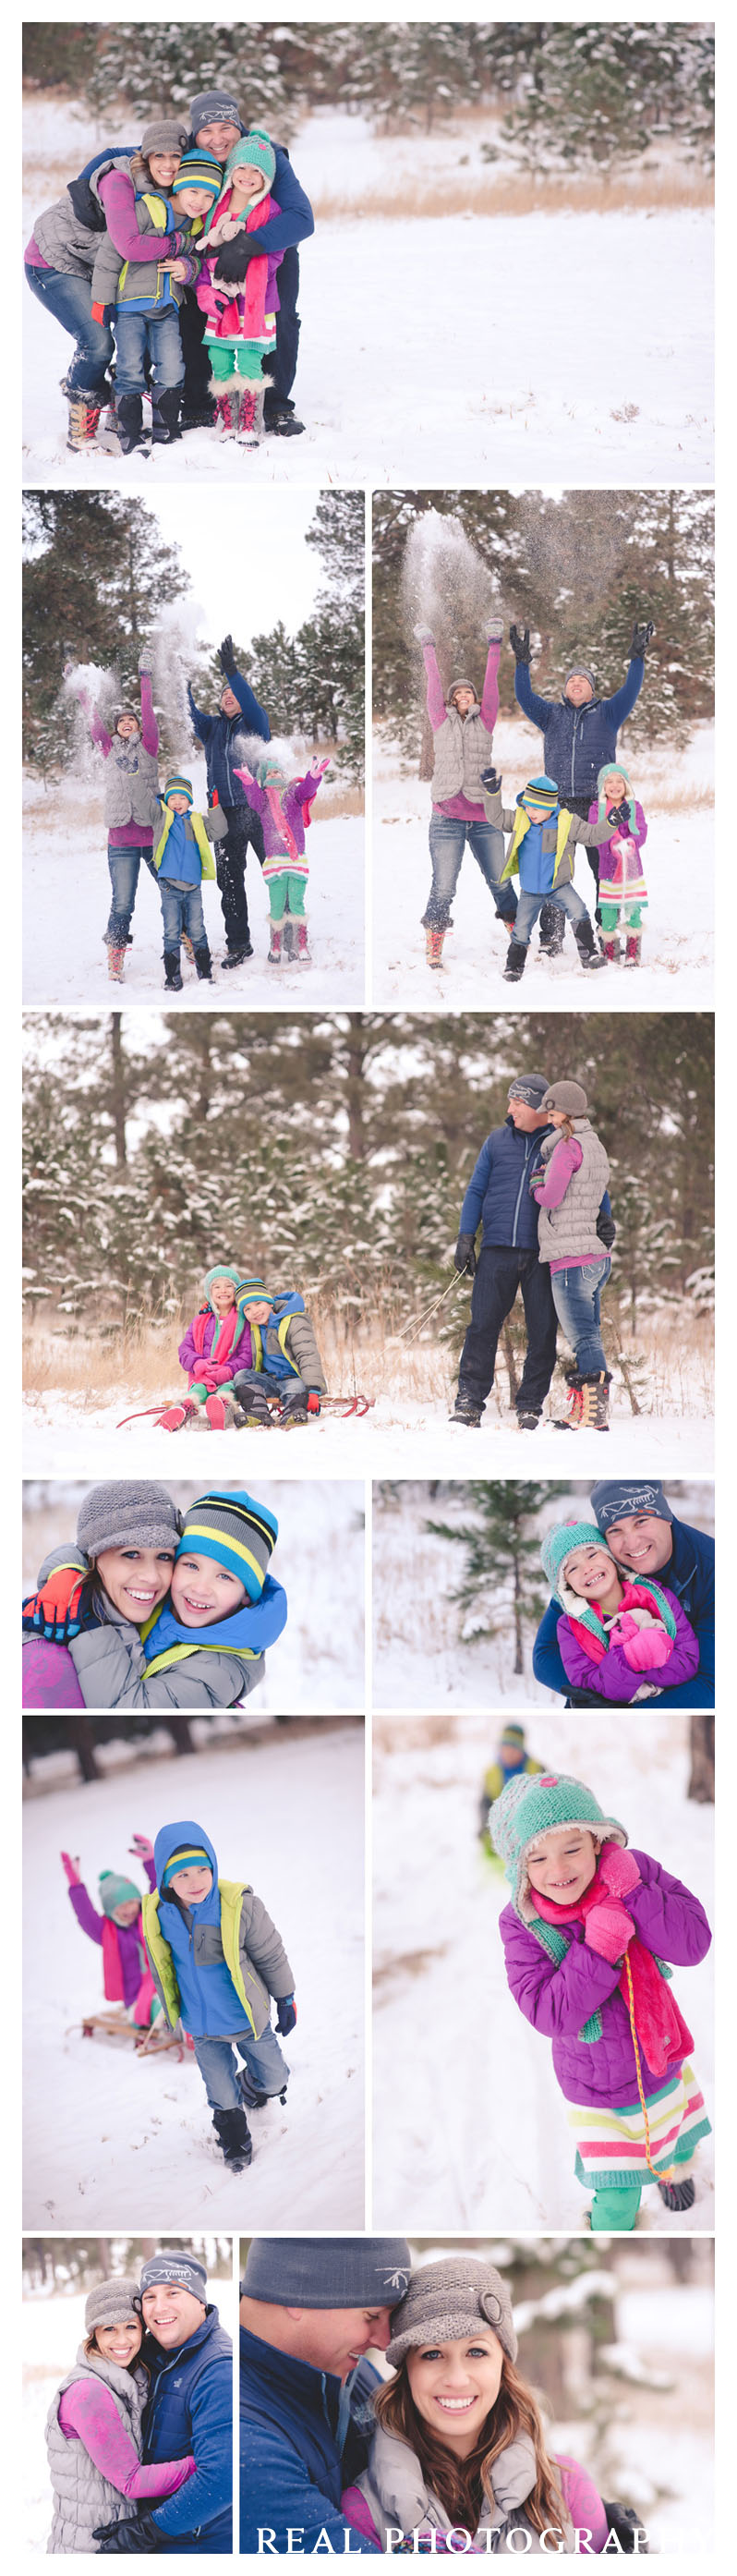 snow winter family portraits fun